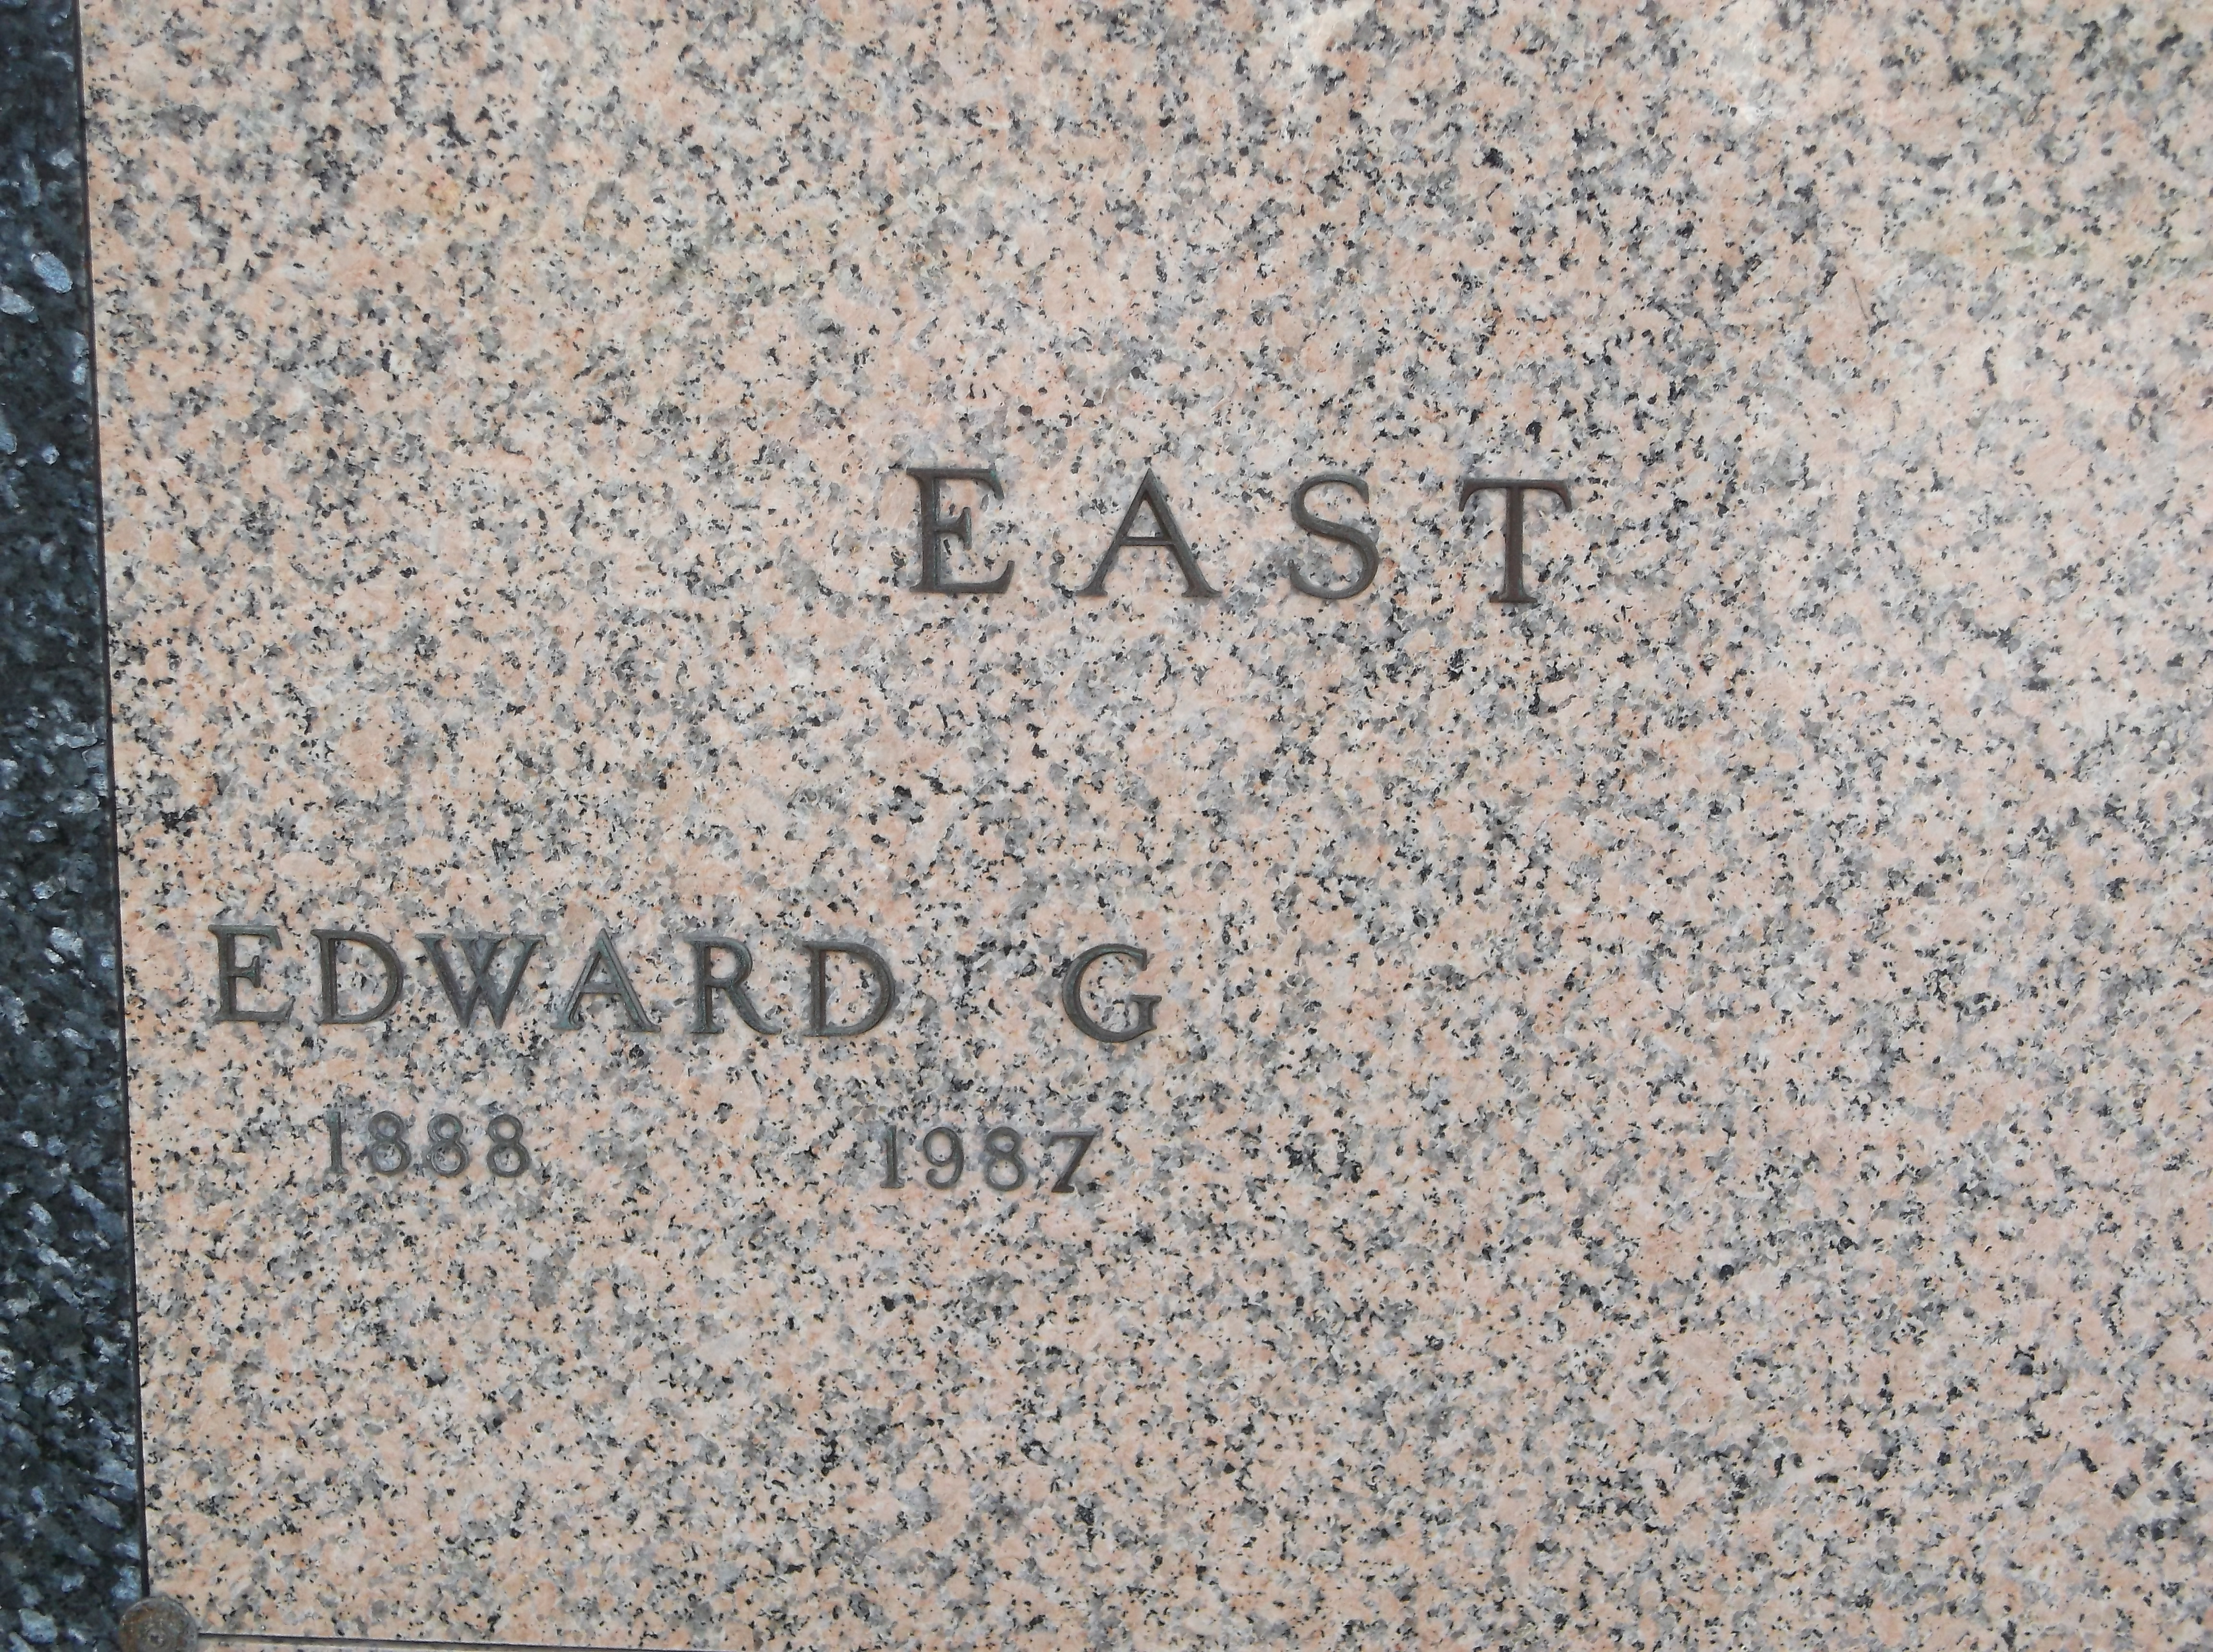 Edward G East